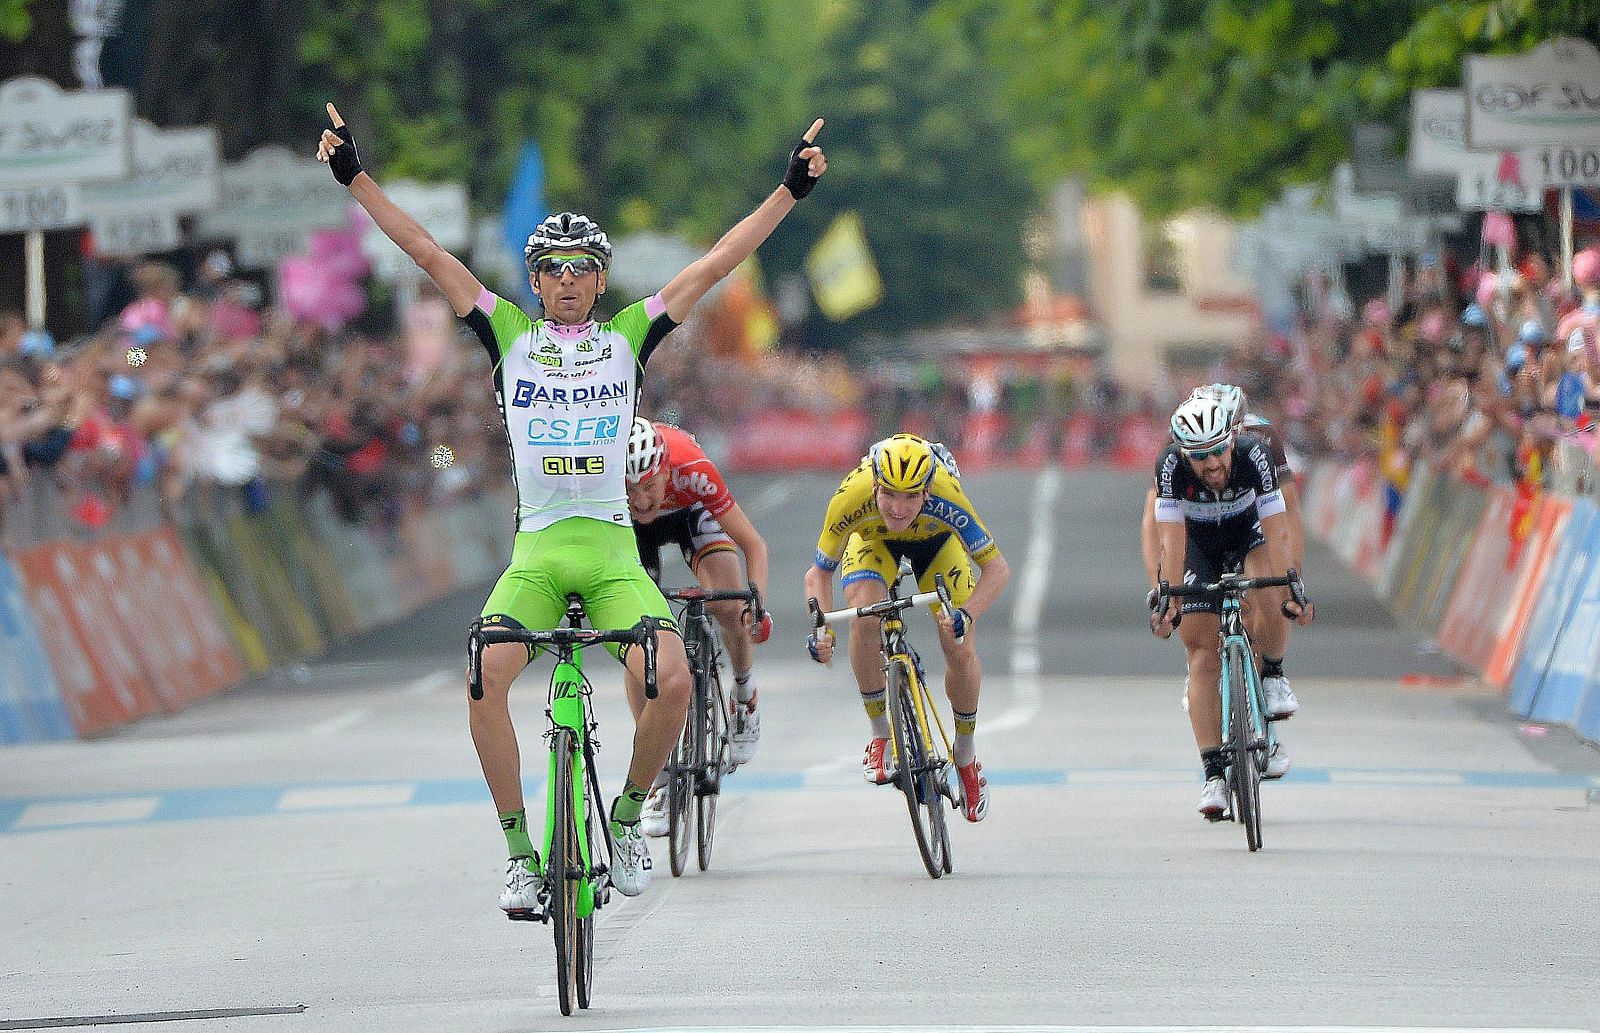 Stefano Pirazzi (Bardiani) celebra su victoria en la decimoséptima etapa del Giro.